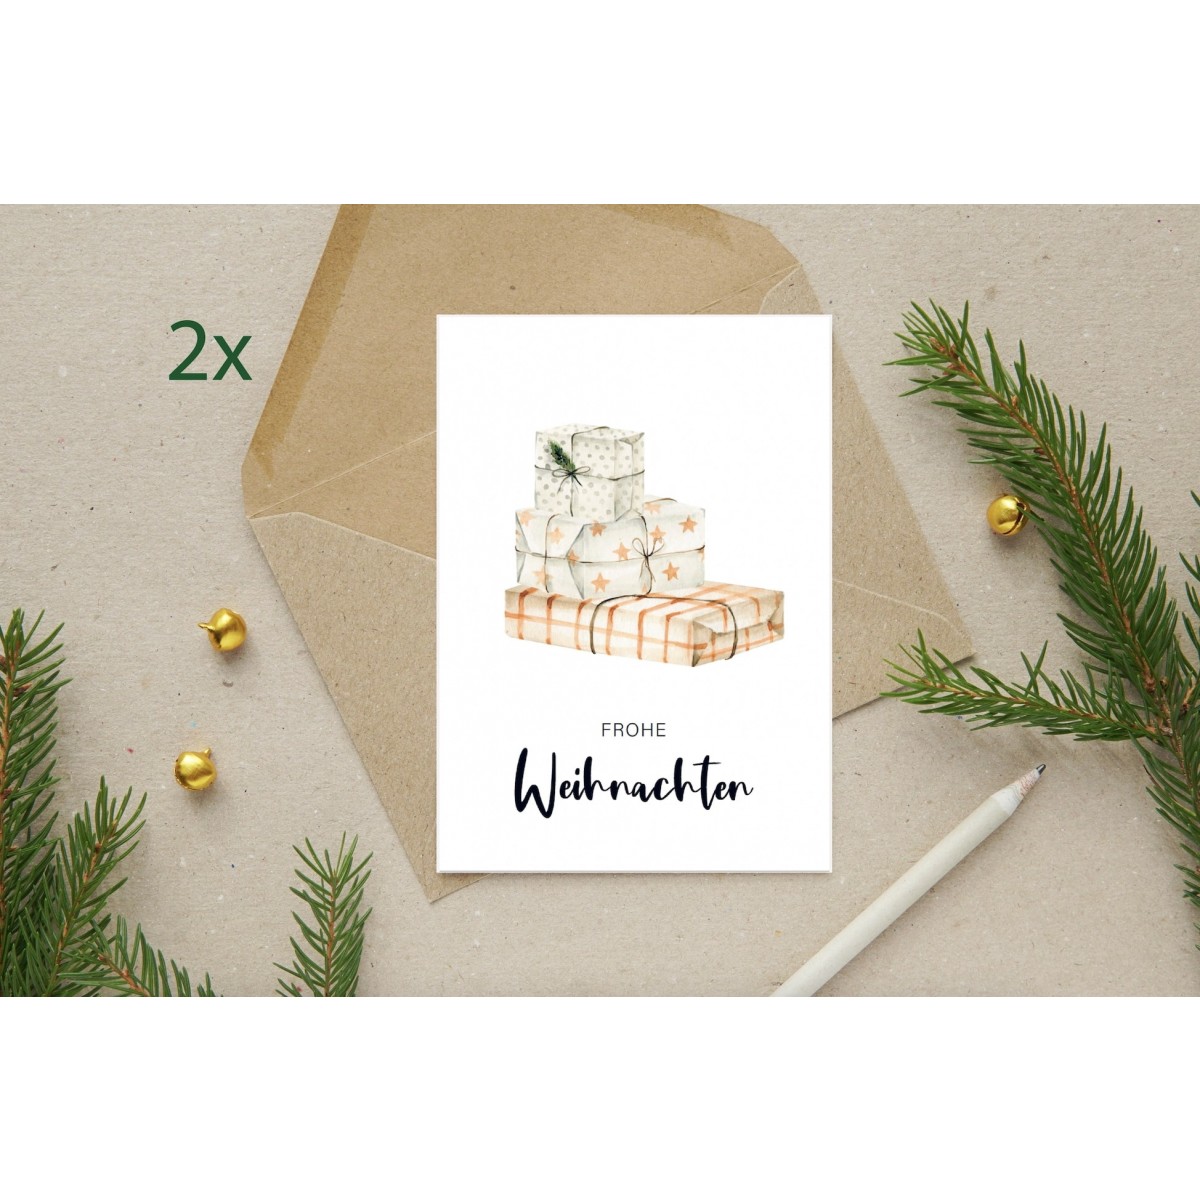 The Life Barn 8x Weihnachtskarten Set Frohe Weihnachten | Weihnachten Karten mit Umschlag | Weihnachtspost